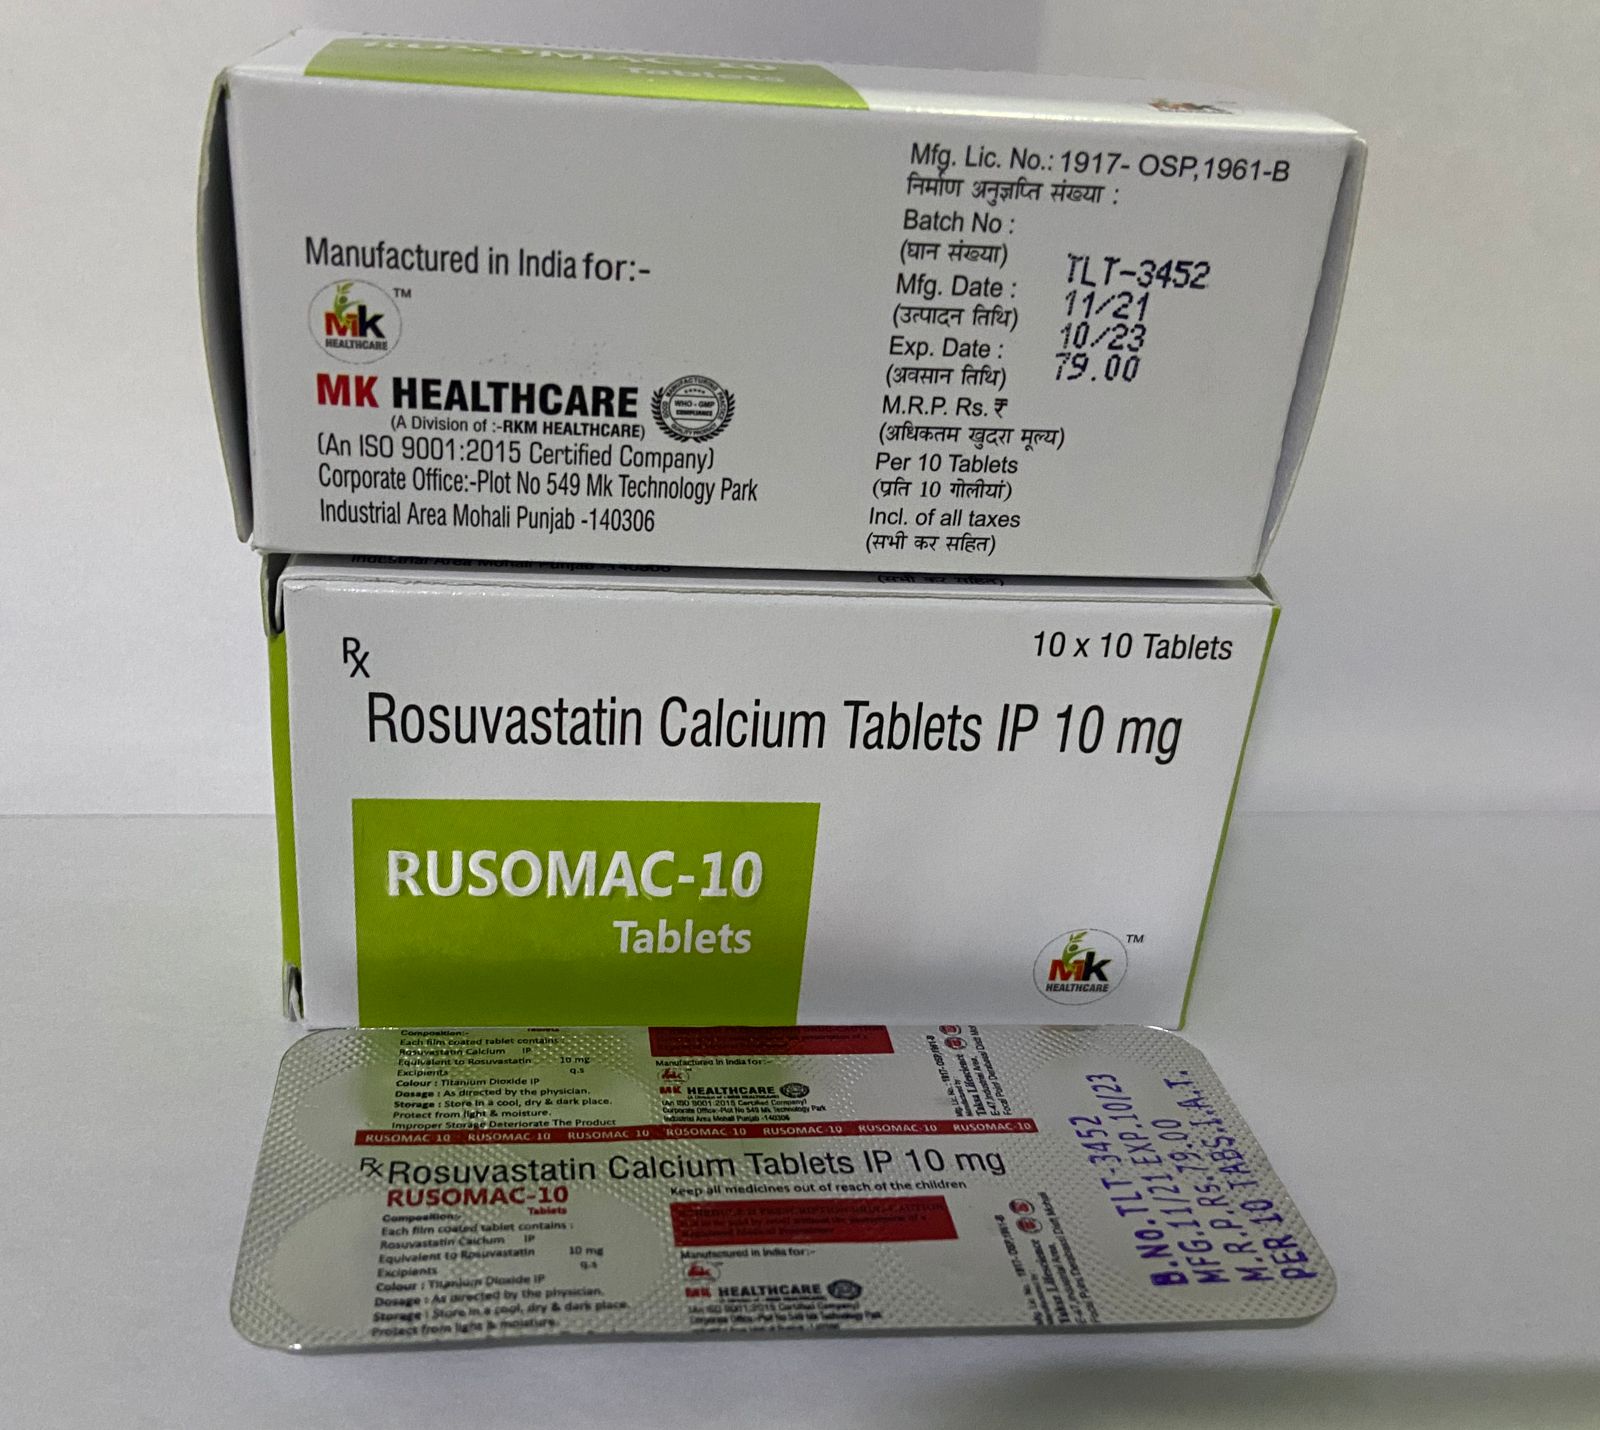 RUSOMAC-10